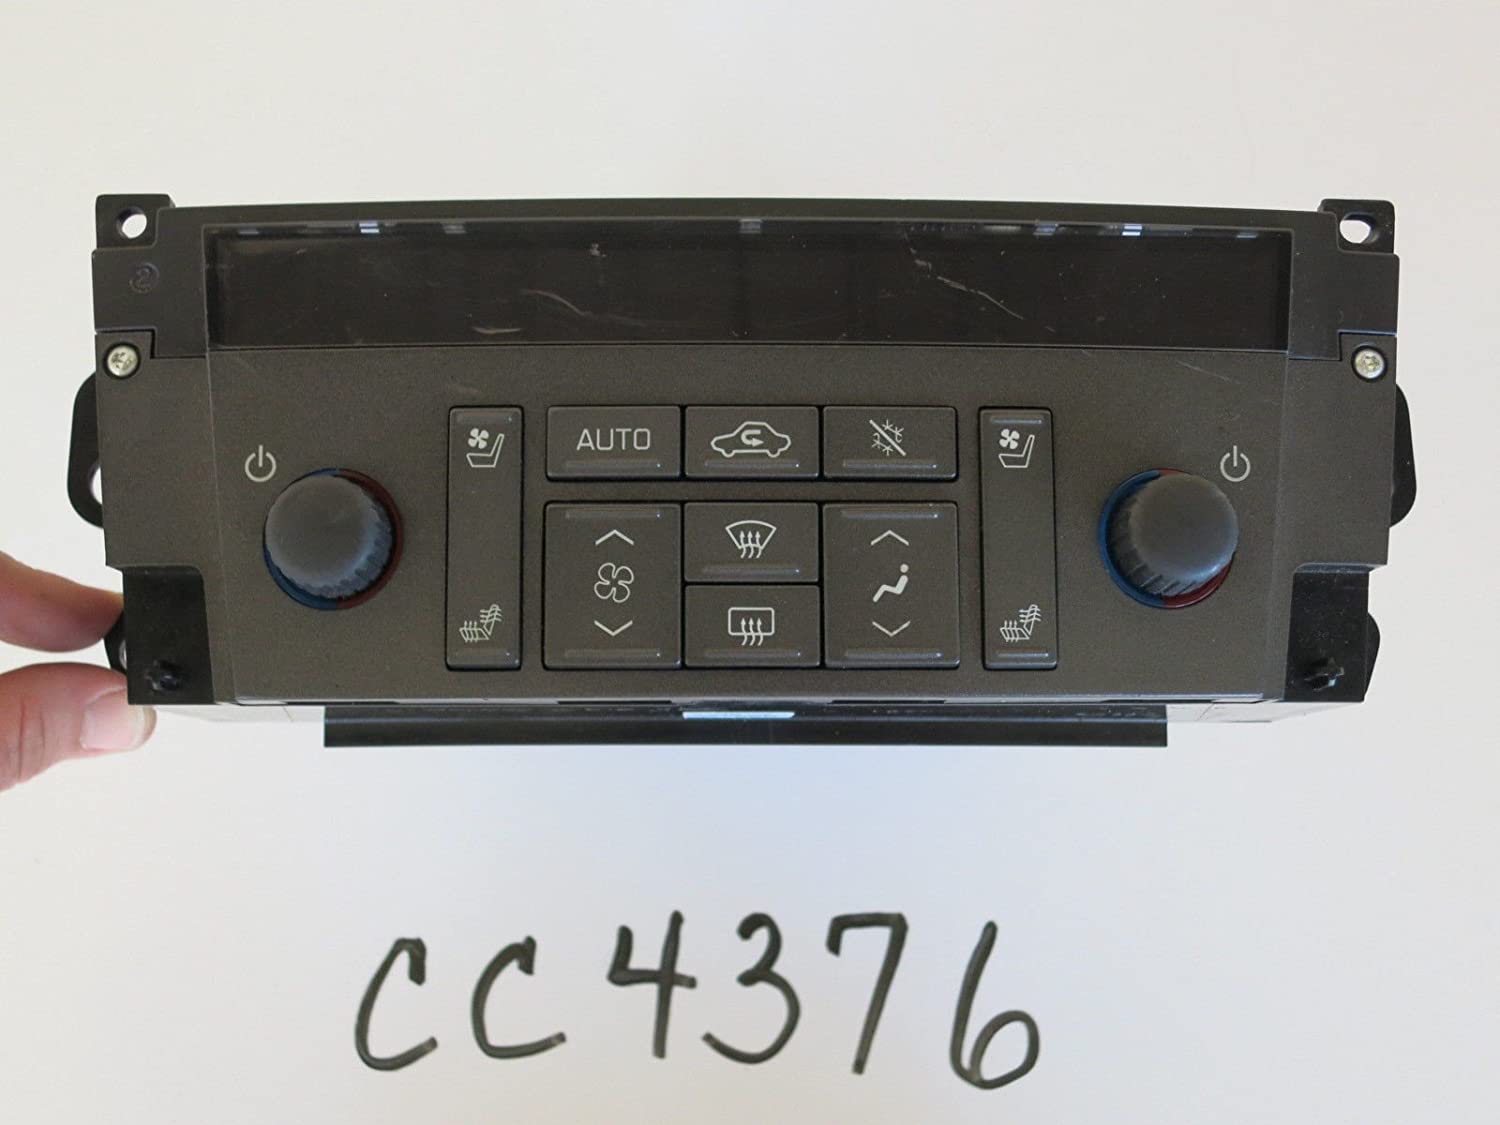 Cadillac 08 09 10 11 STS Climate Control Panel Temp Unit A/C Heater OEM CC4376